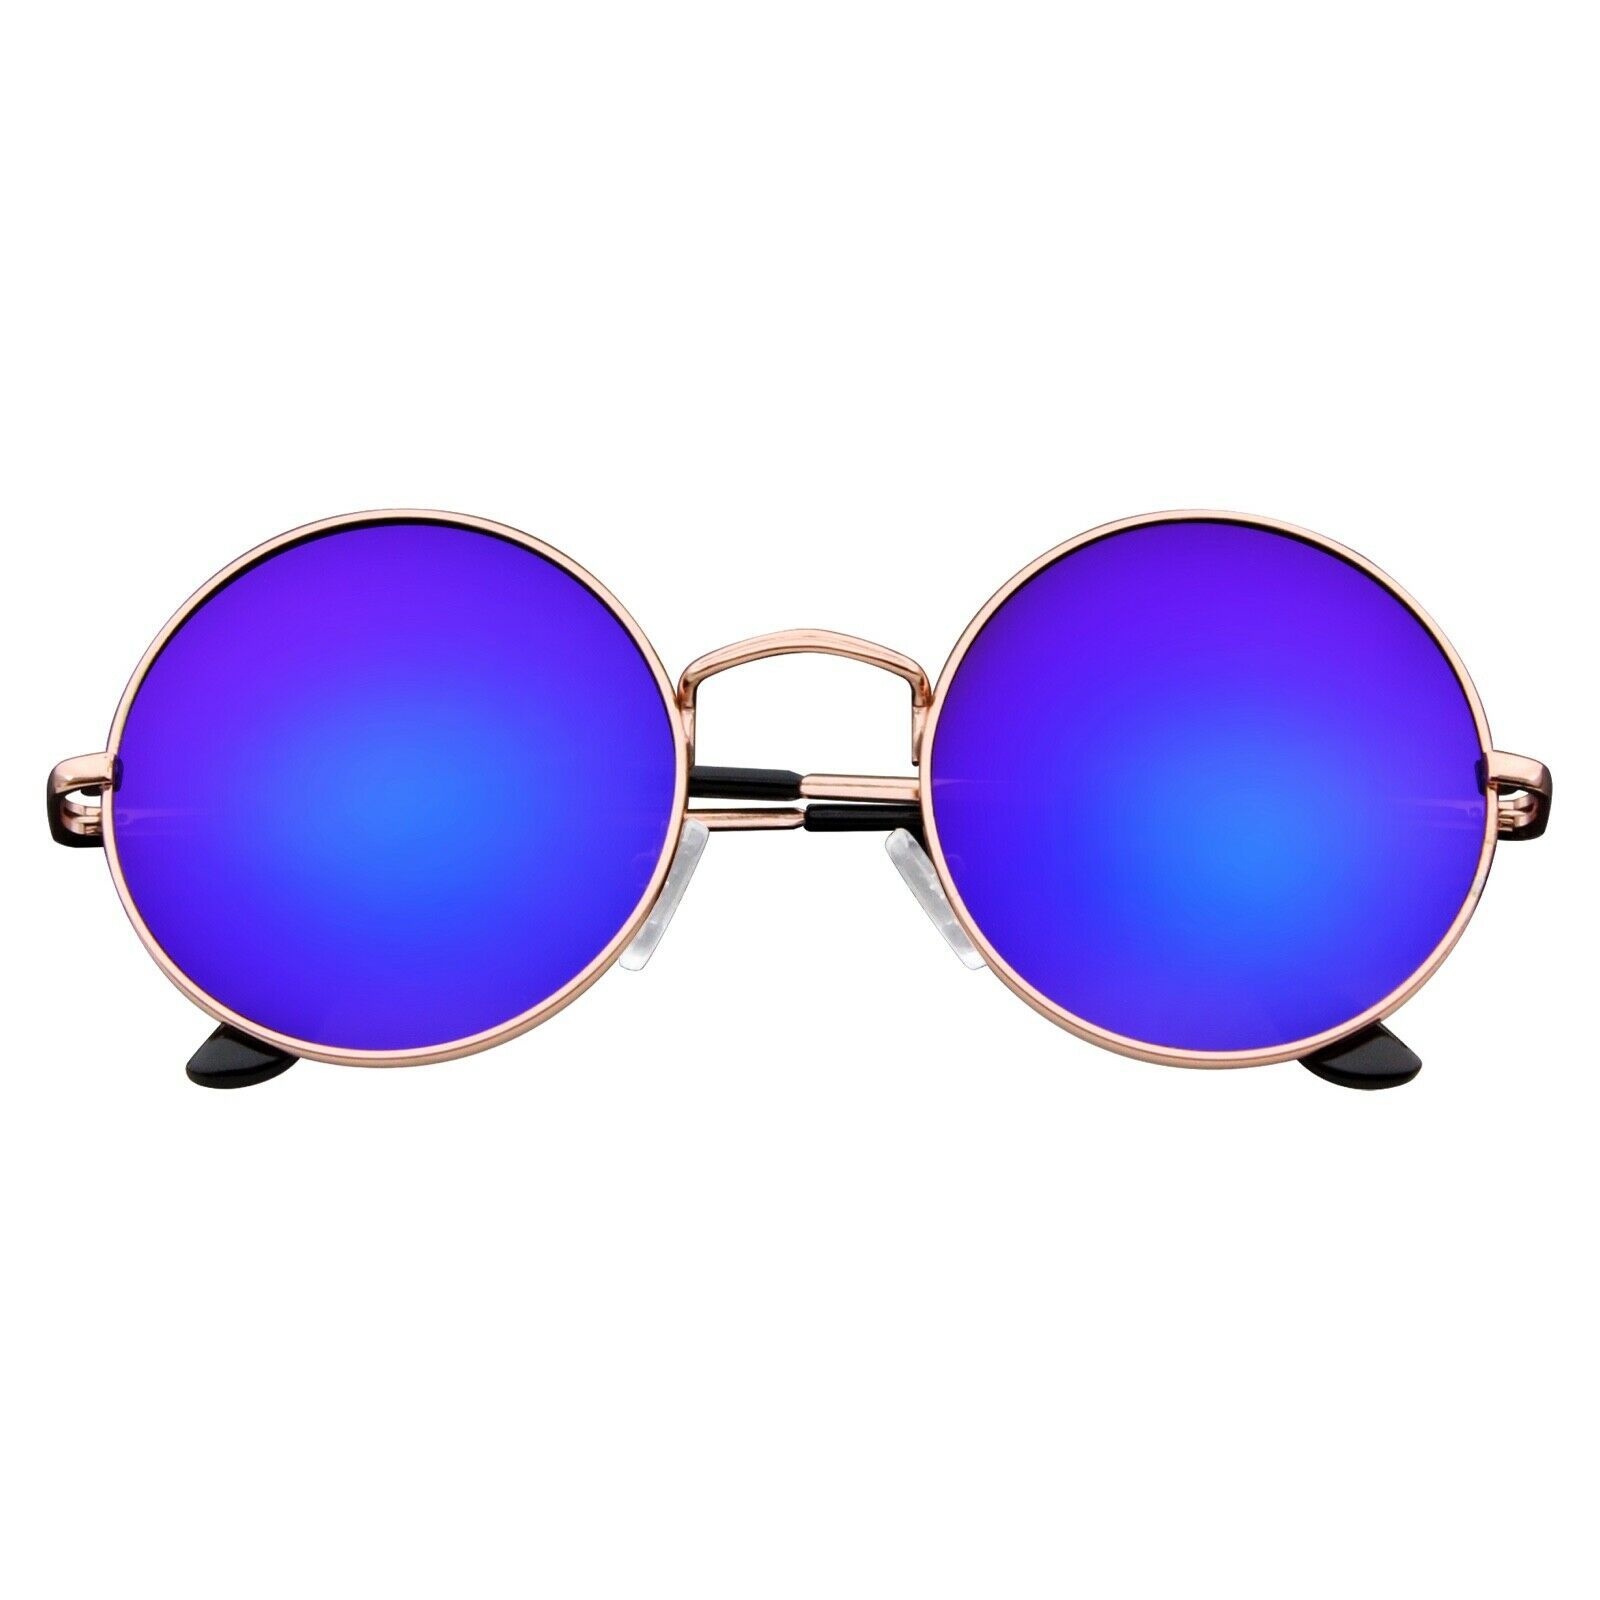 John Lennon Sunglasses Round Hippie Shades Retro Reflective Colored Lenses